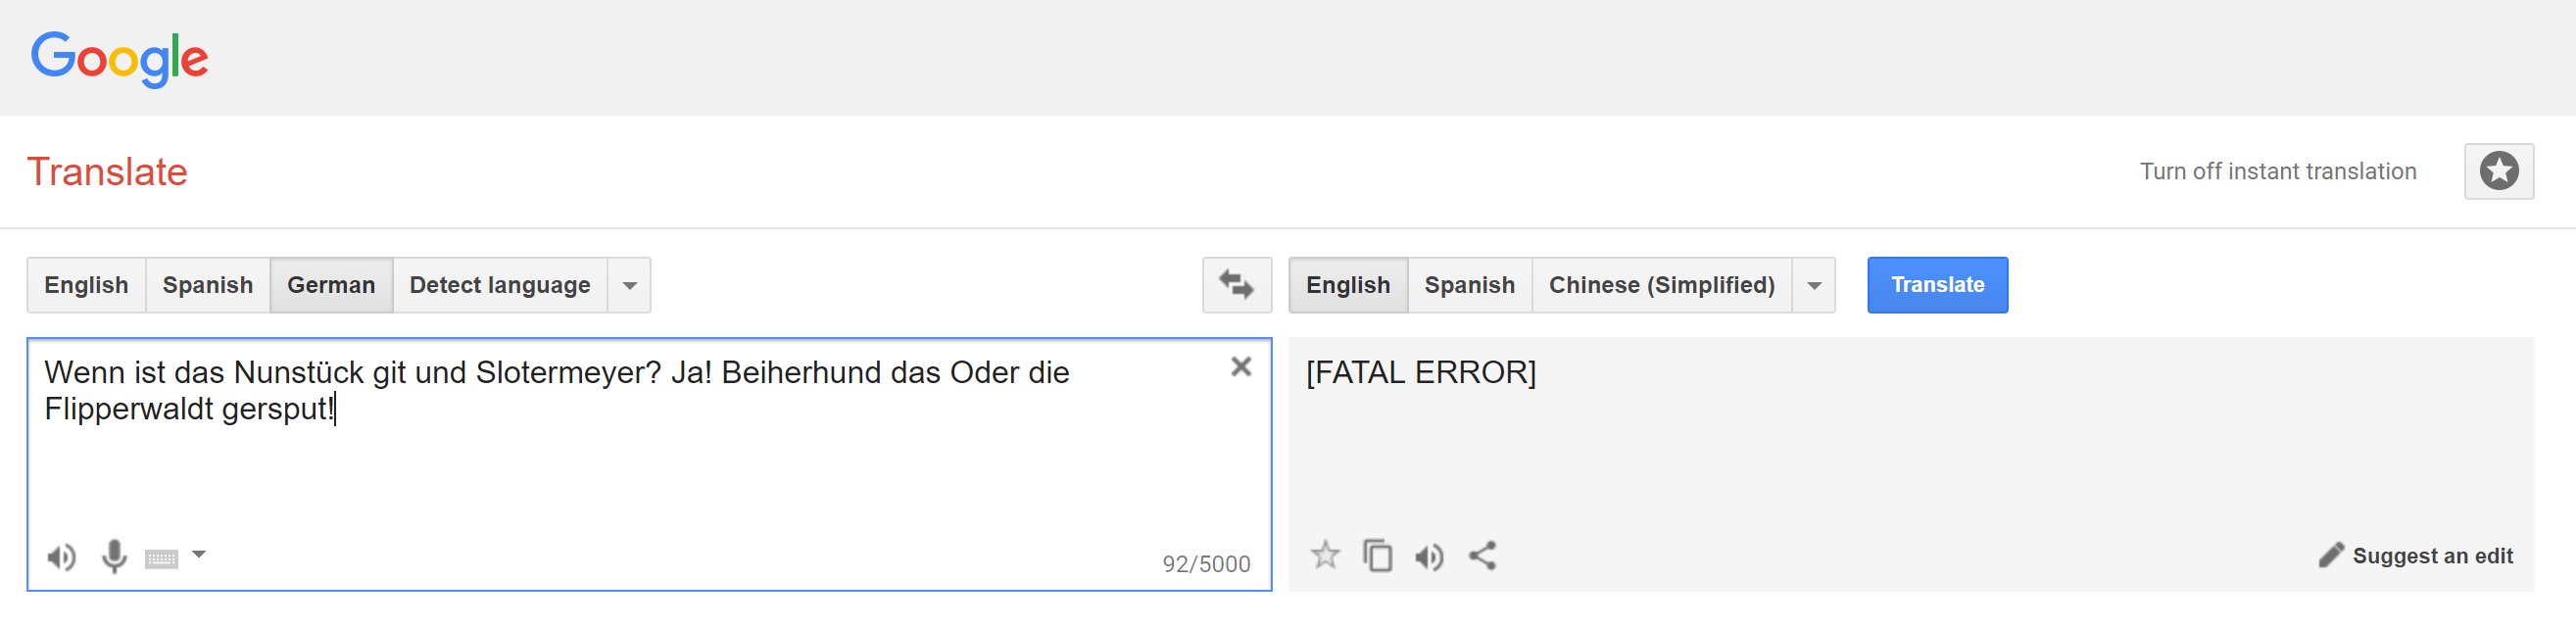 Translate english simplified google to chinese Google translate